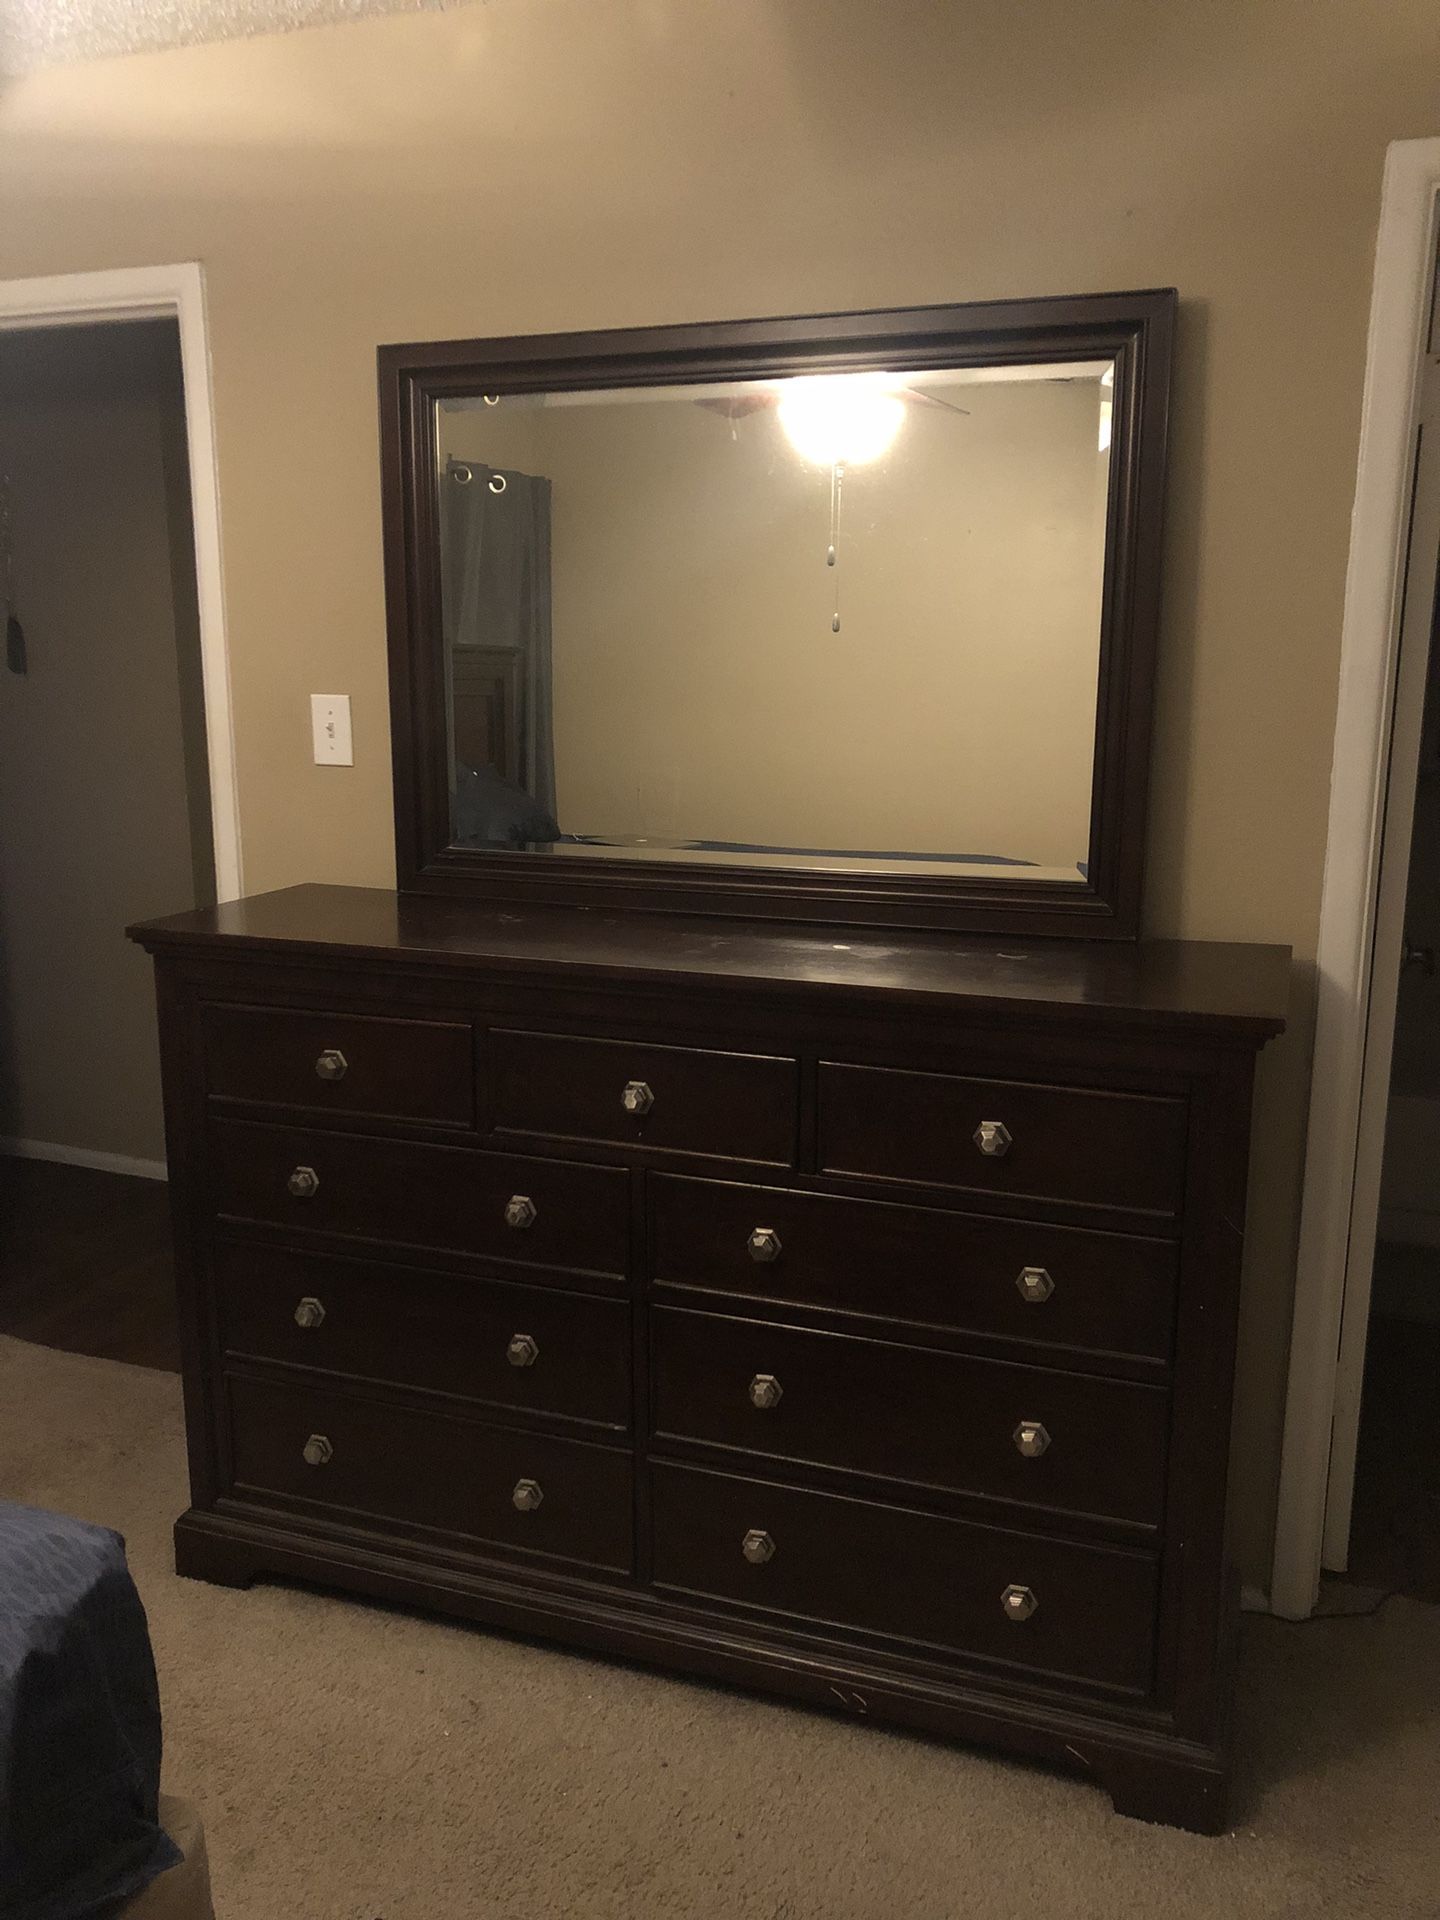 9 Drawer Solid Wood Dresser w/ Mirror